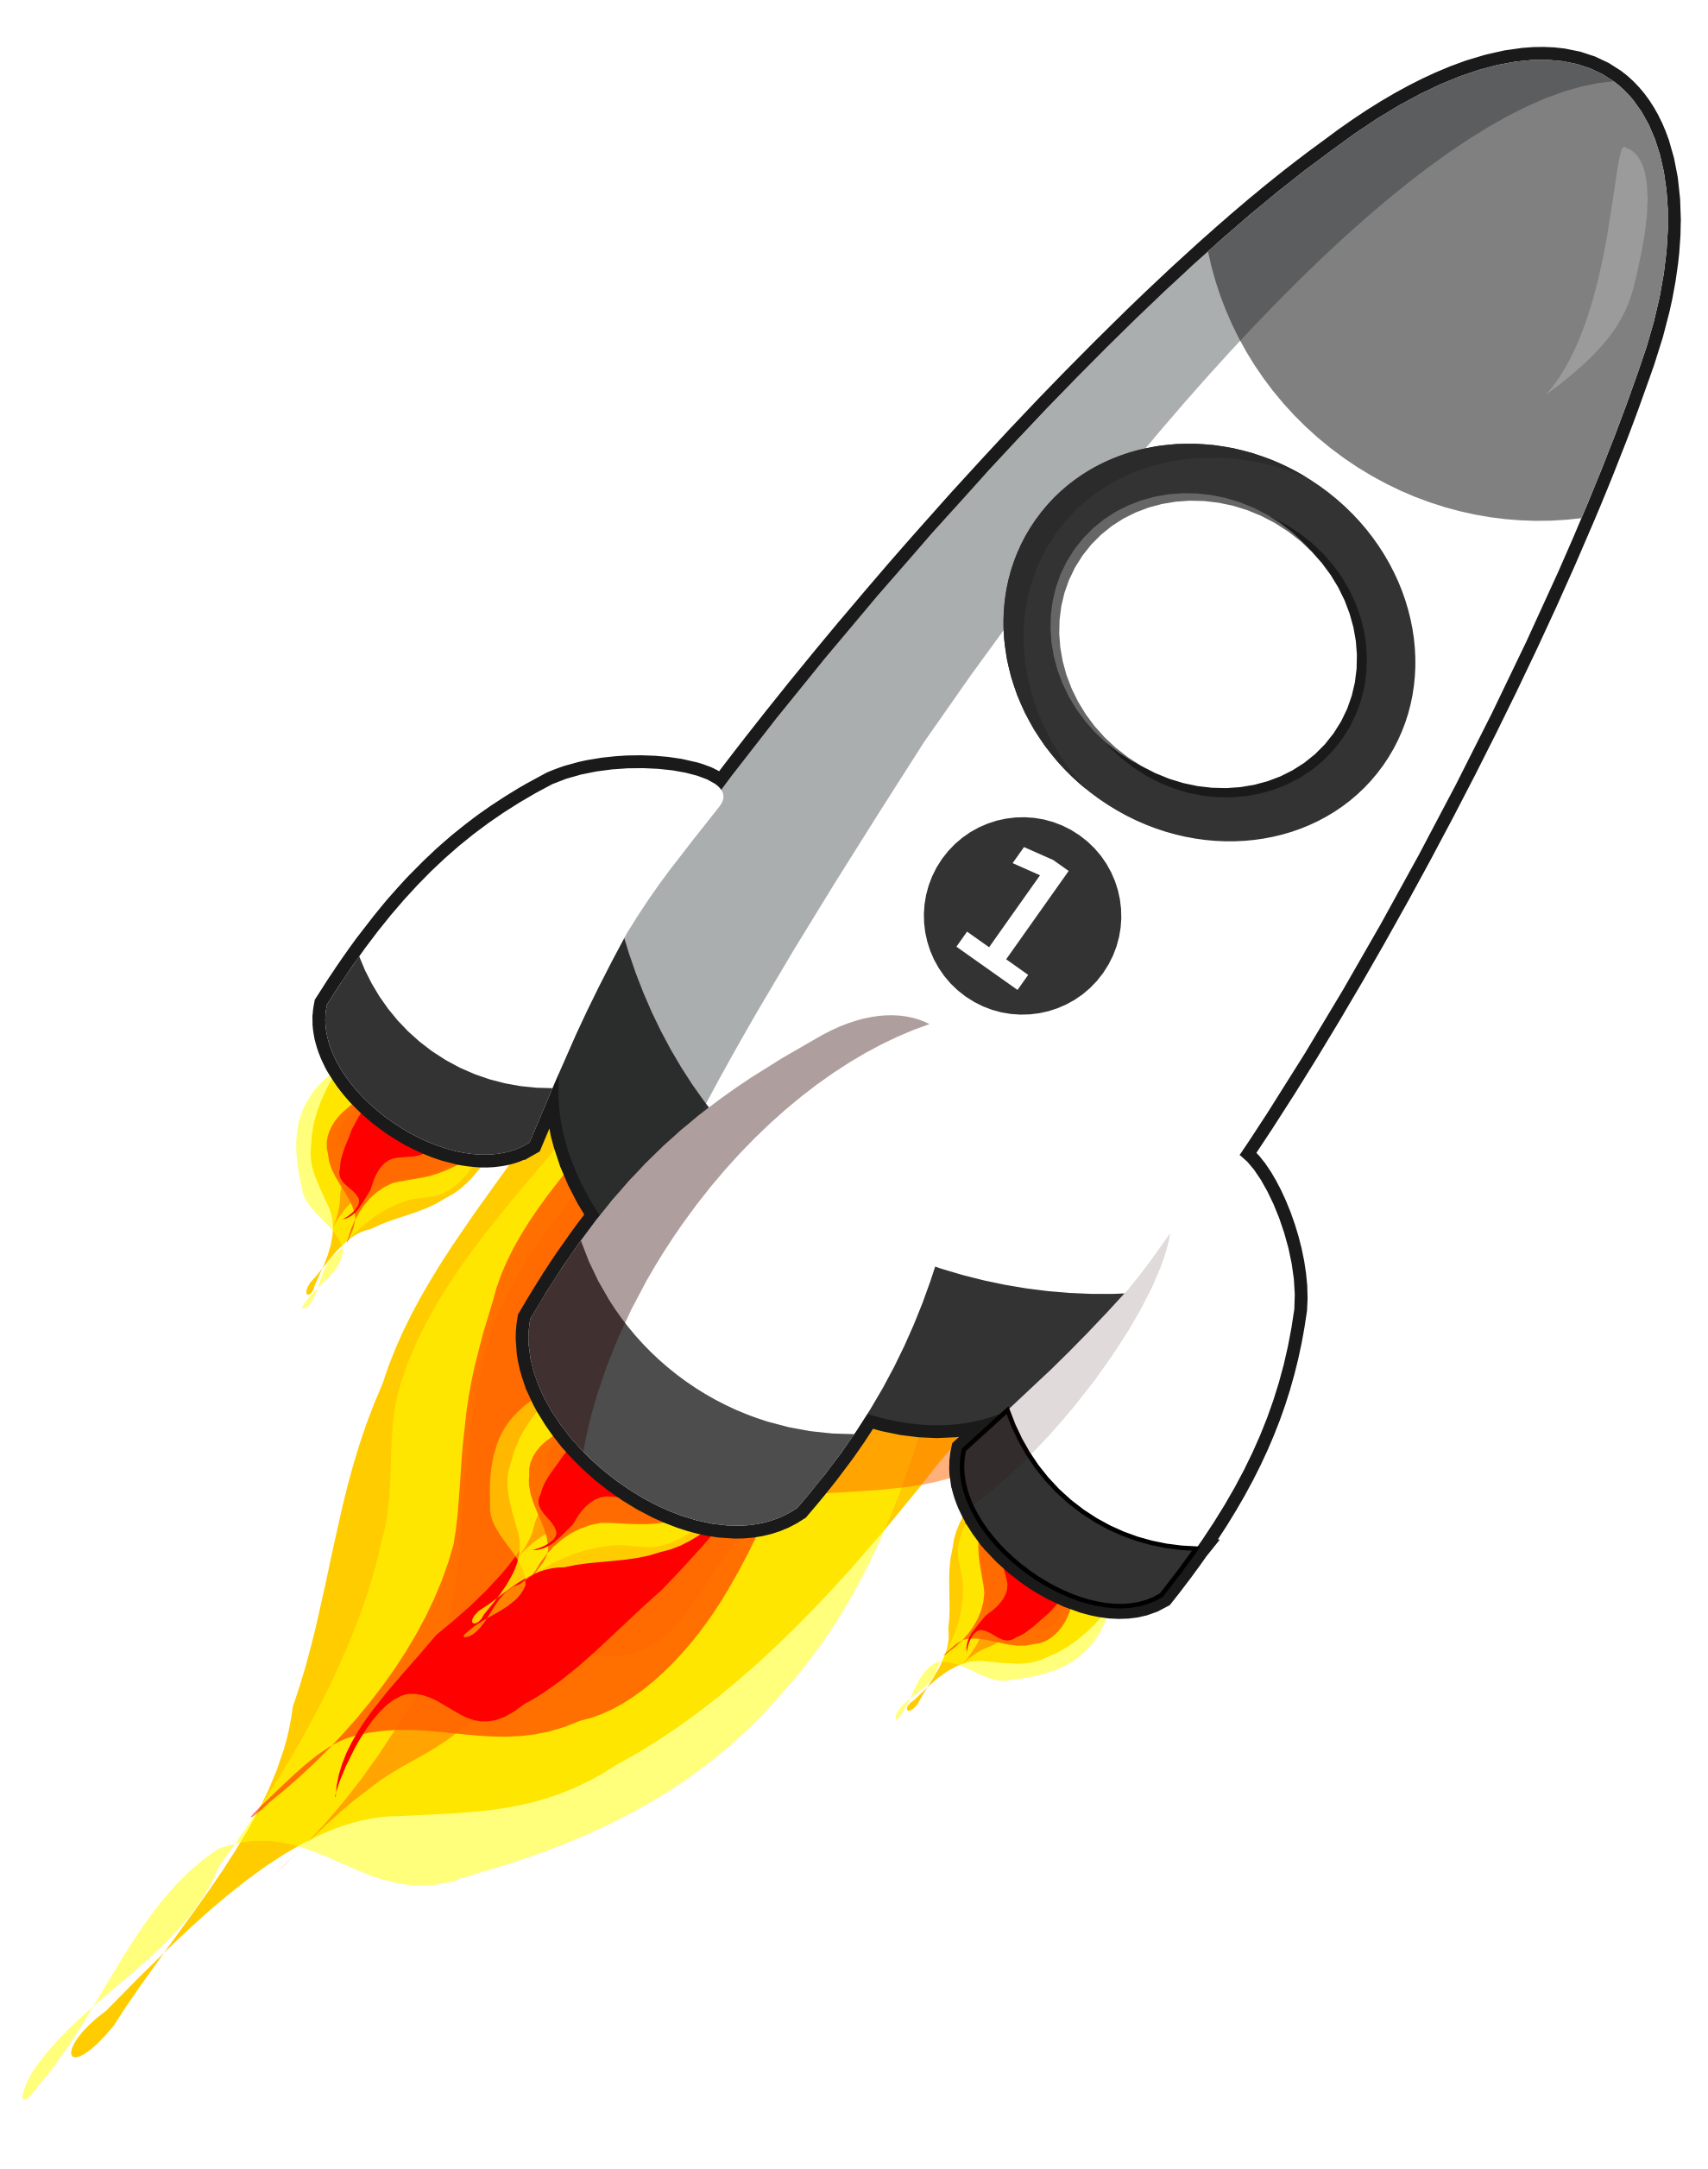 Clipart Rocket Ship - Cliparts.co